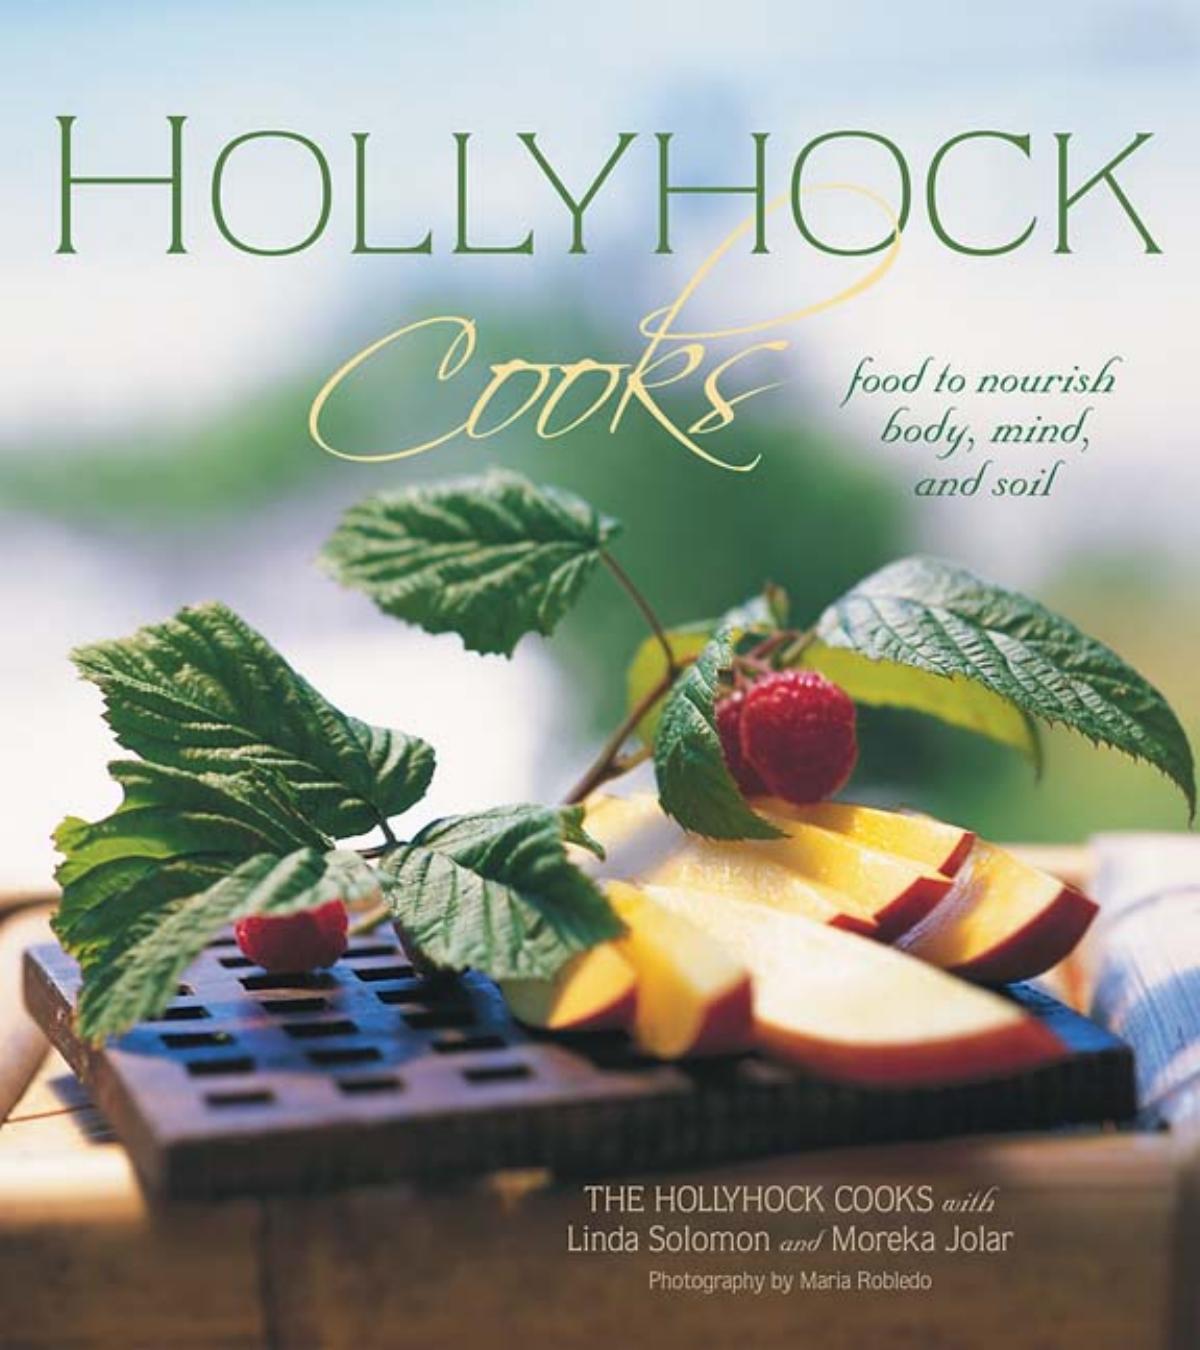 Hollyhock Cooks : Food to Nourish Body, Mind and Soil by Moreka Jolar; Linda Solomon; Maria Robledo; Maria Robledo